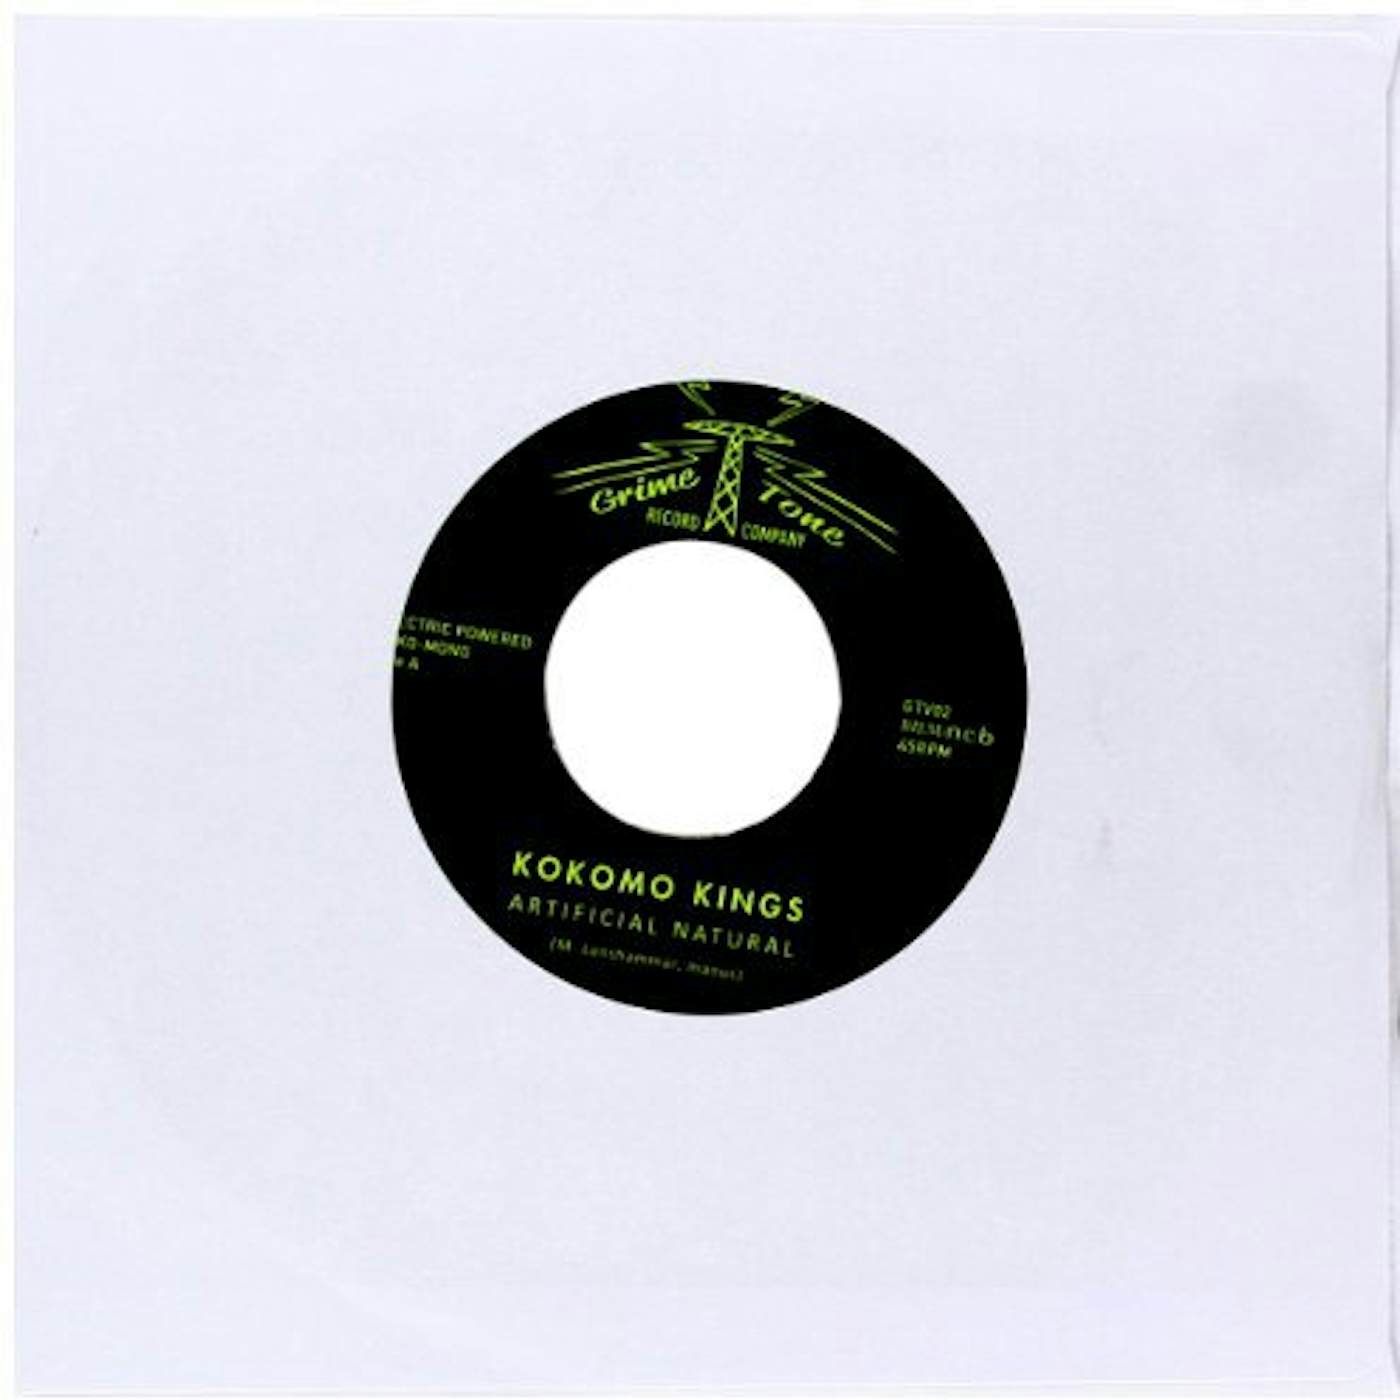 The Kokomo Kings Artificial Natural Vinyl Record